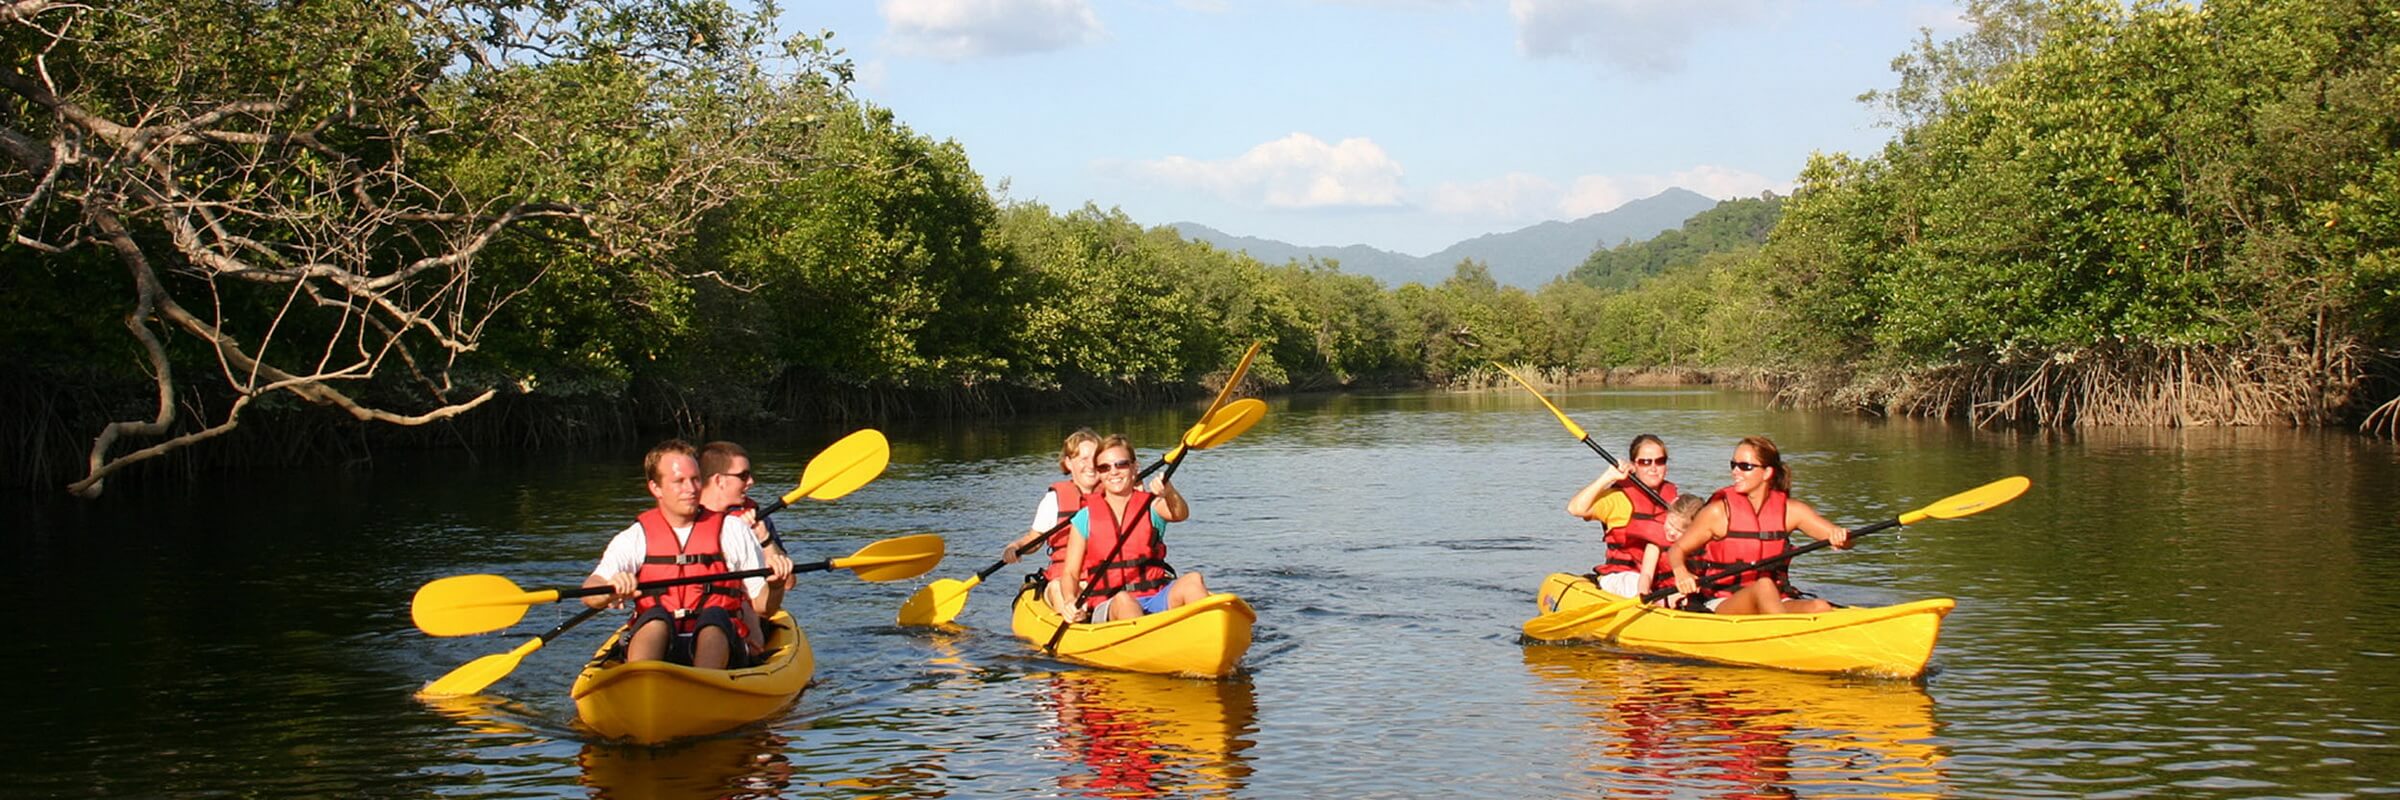 Kayakfahrten gehören zu den beliebtesten Aktivitäten im Khao Sok Nationalpark.